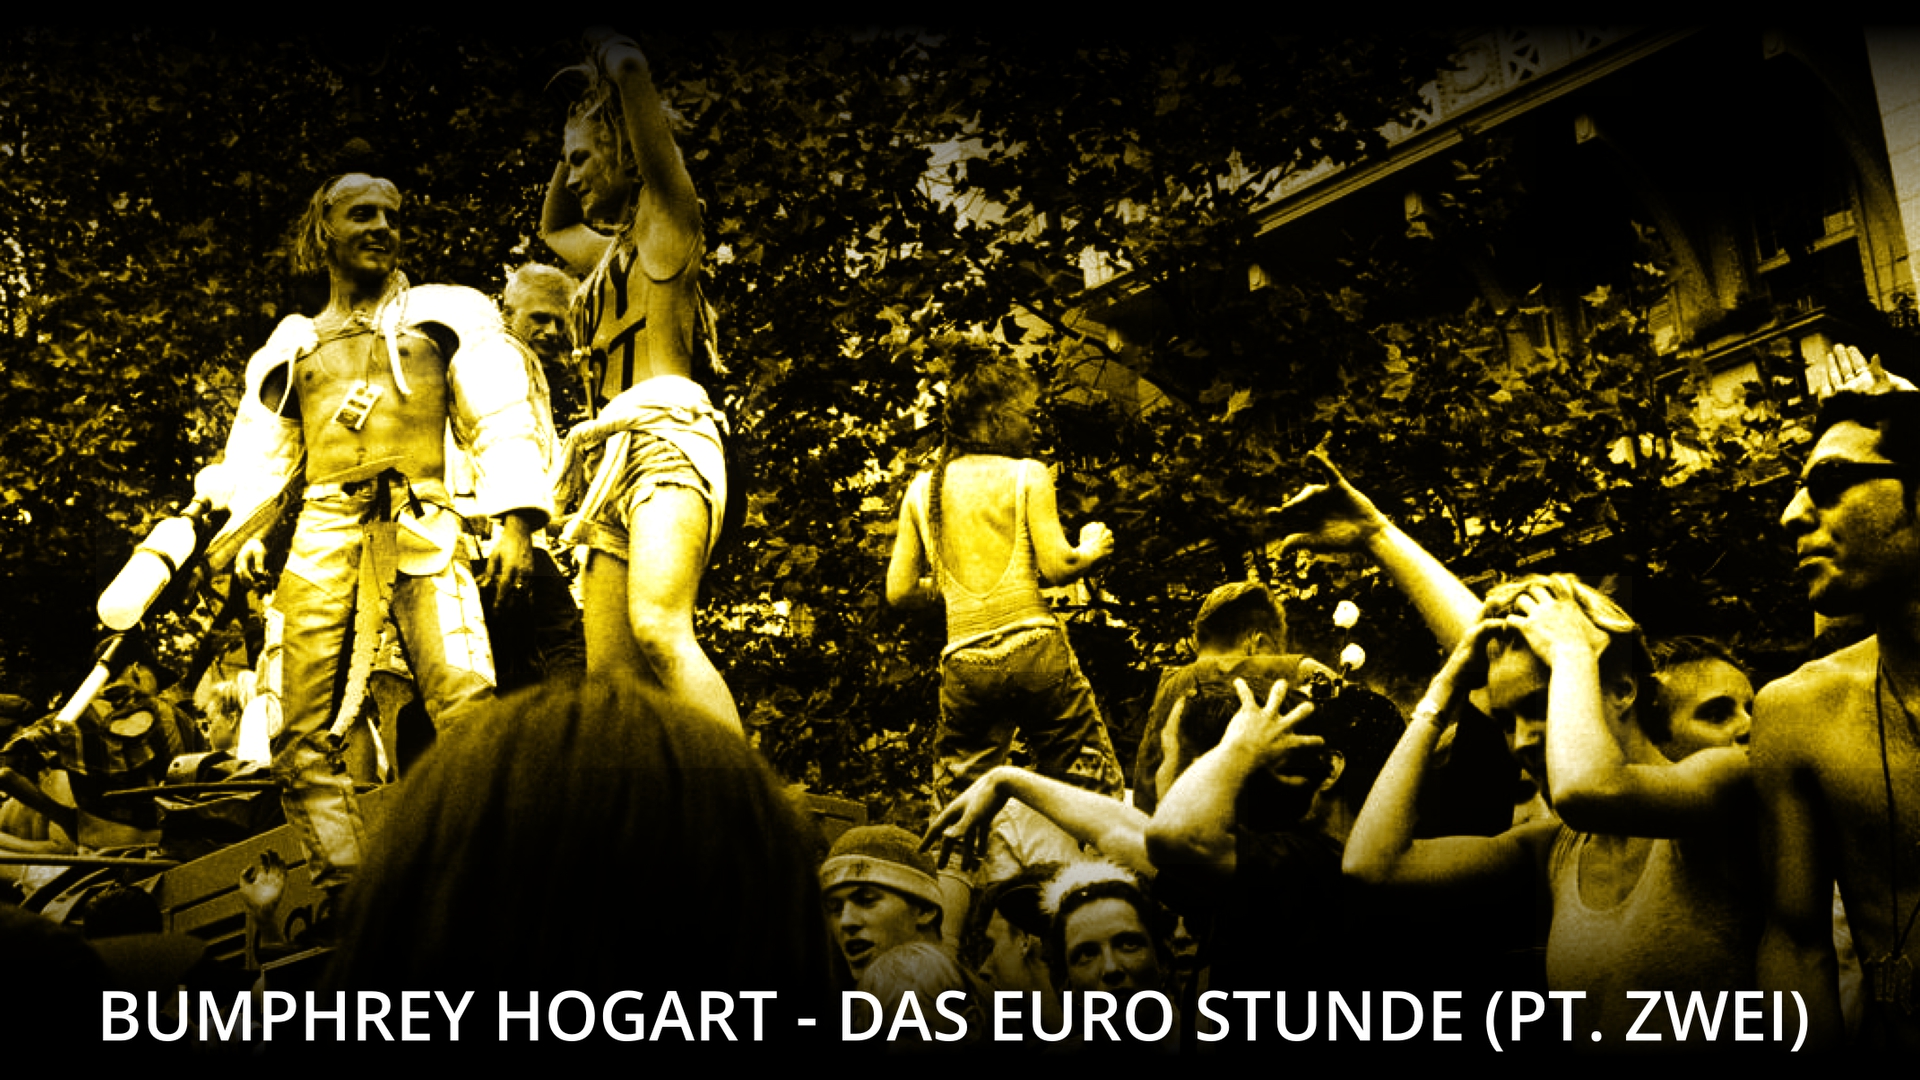 BUMPHREY HOGART-DAS EURO STUNDE (PT. ZWEI)